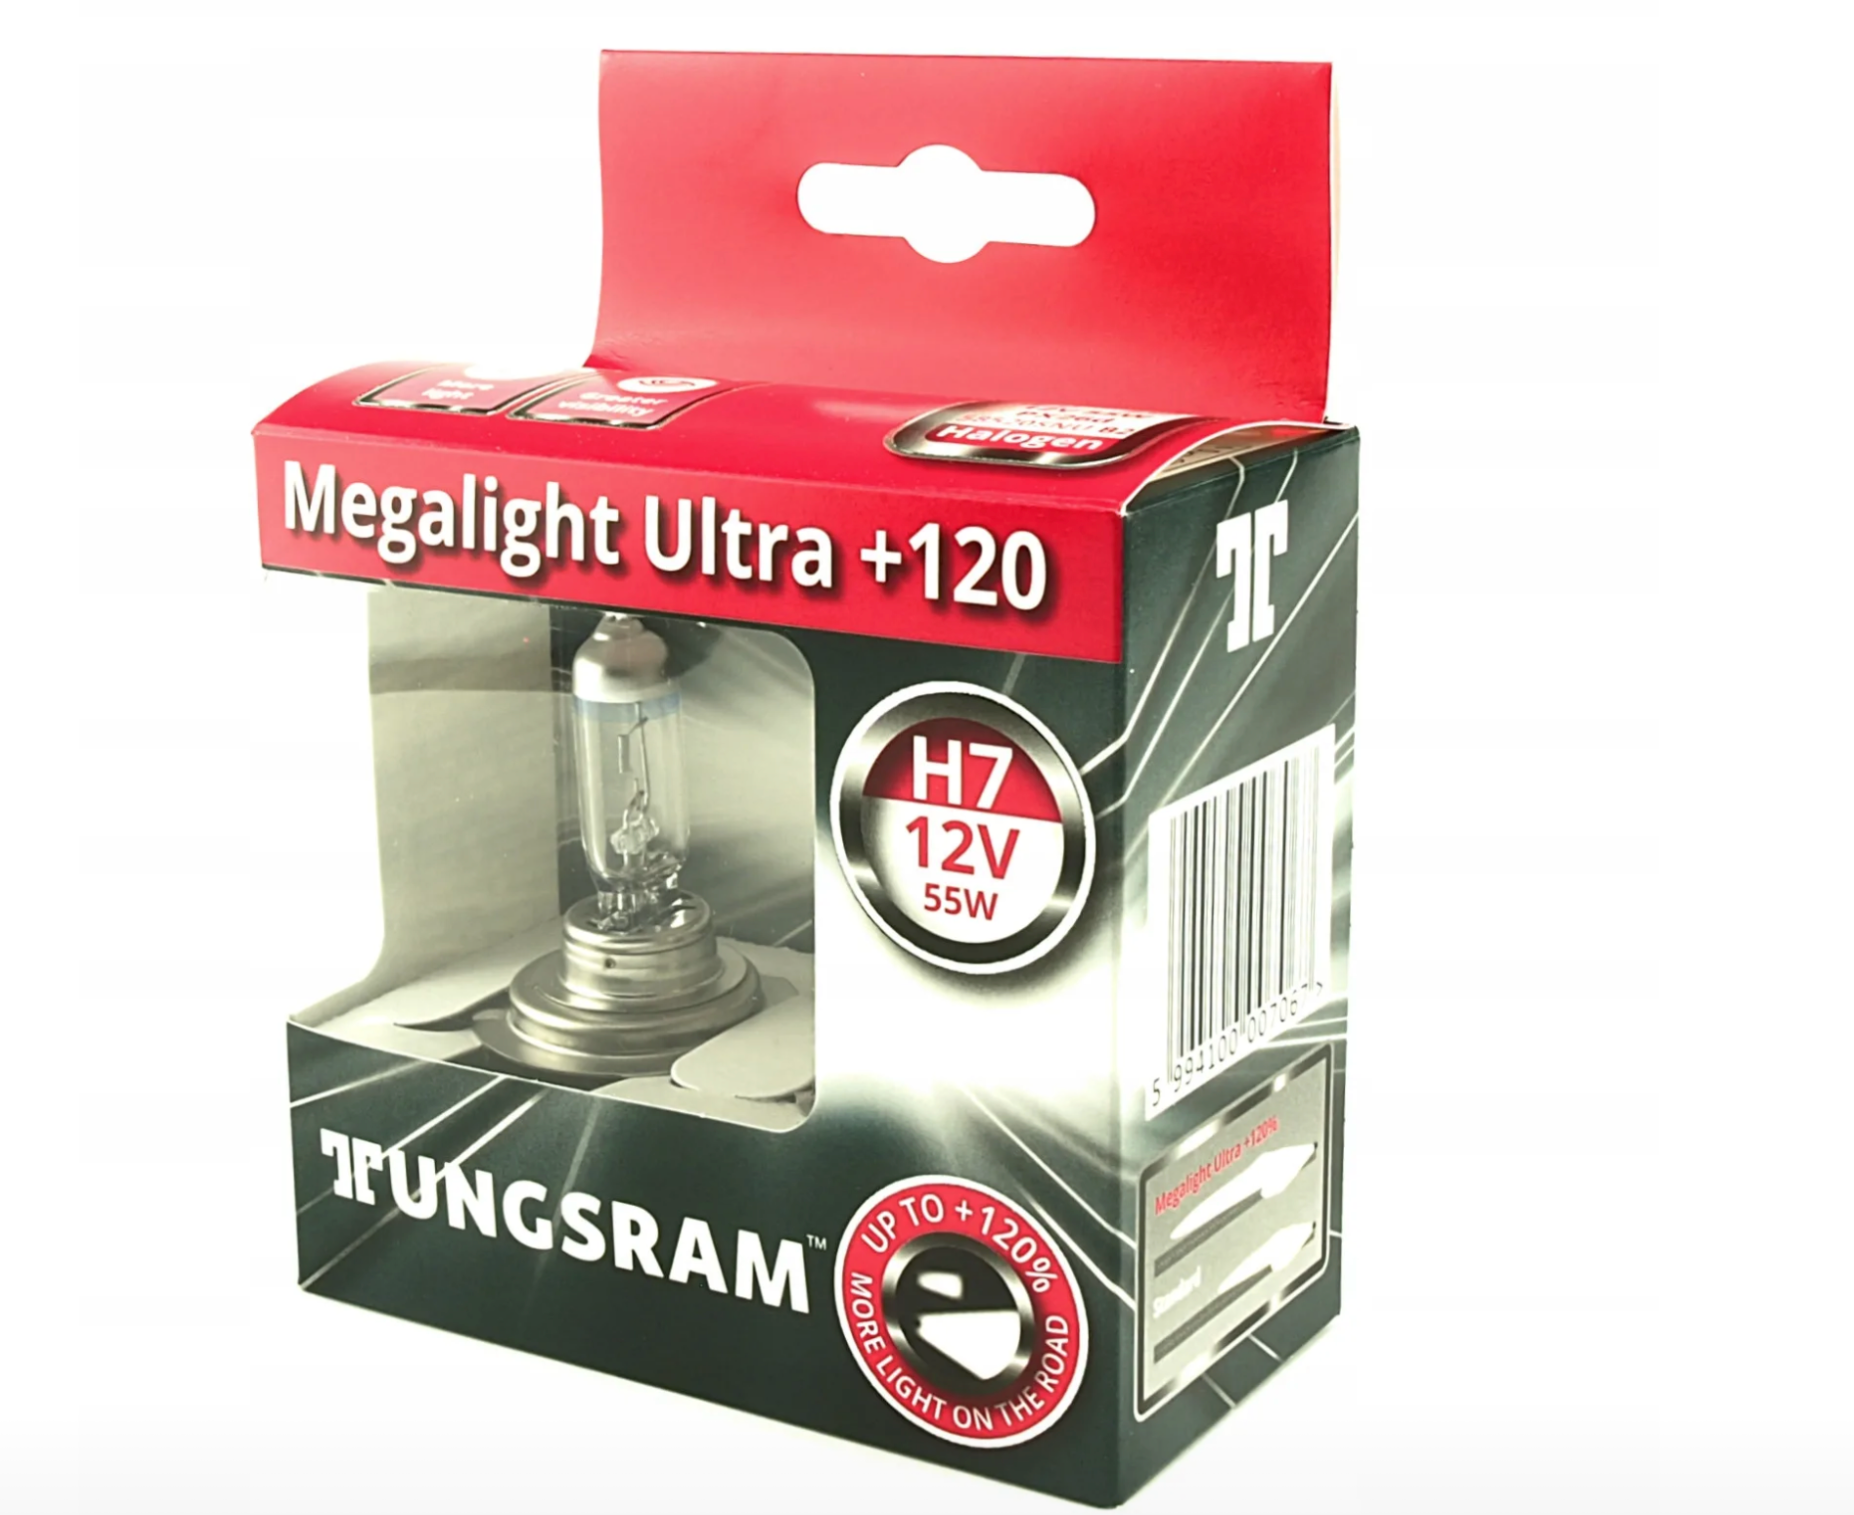 Tungsram 12v Лампа  H7  55w Megalight Ultra +120 Компл. 58520snu  B2 TUNGSRAM арт. 58520SN